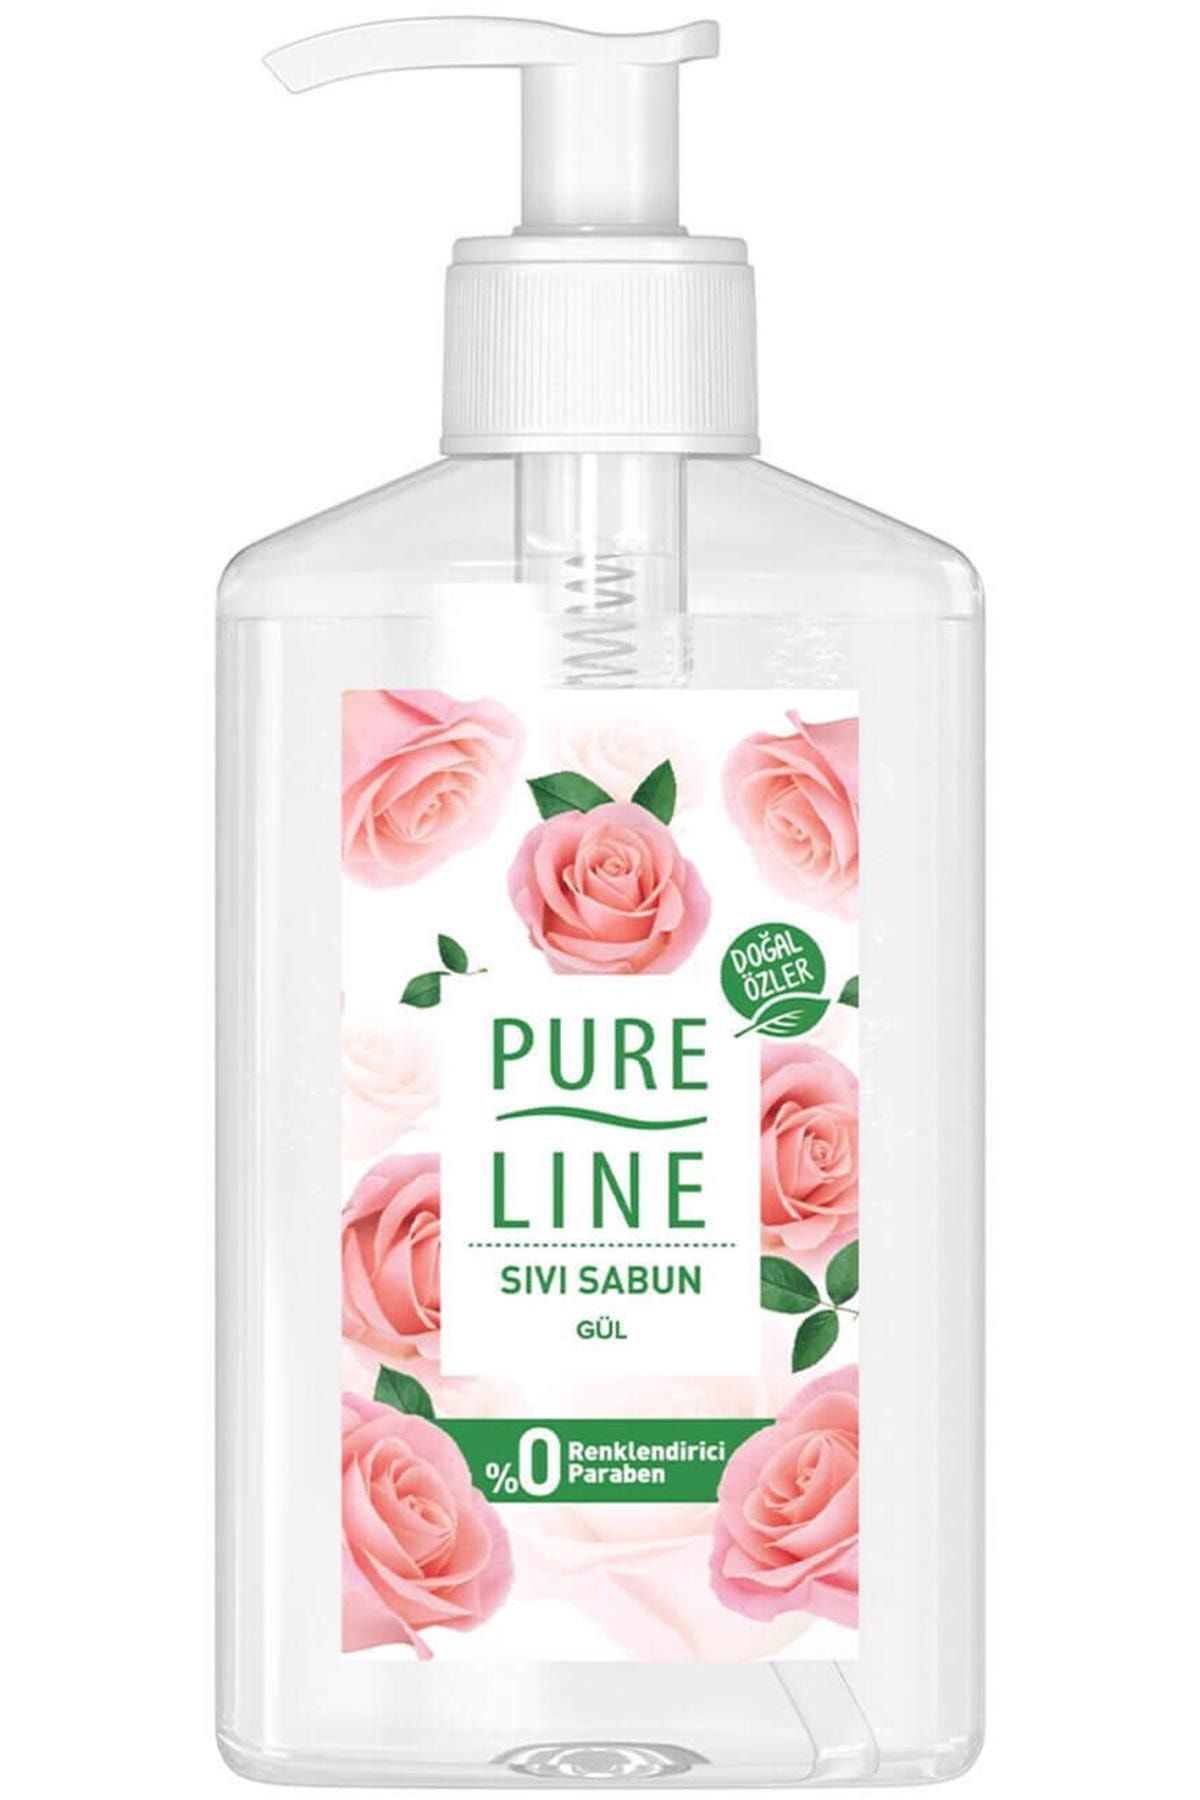 Pure Line Pureline Sıvı Sabun Gül 280ml